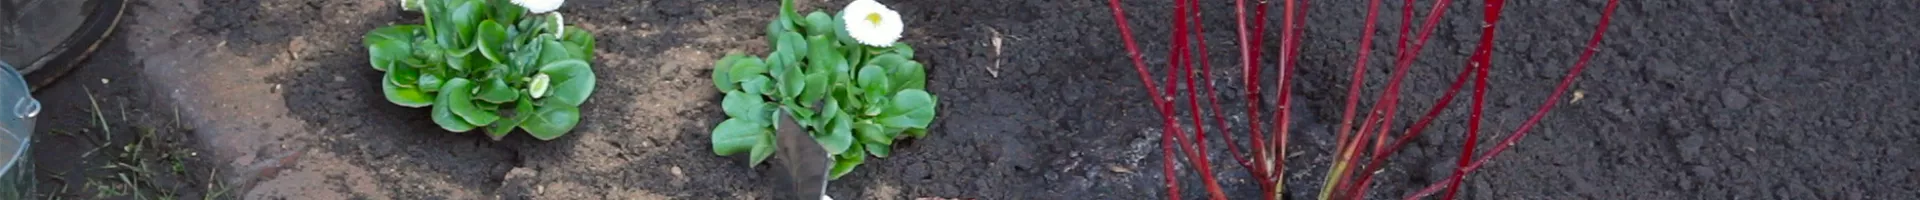 Gänseblümchen - Einpflanzen im Garten (thumbnail).jpg